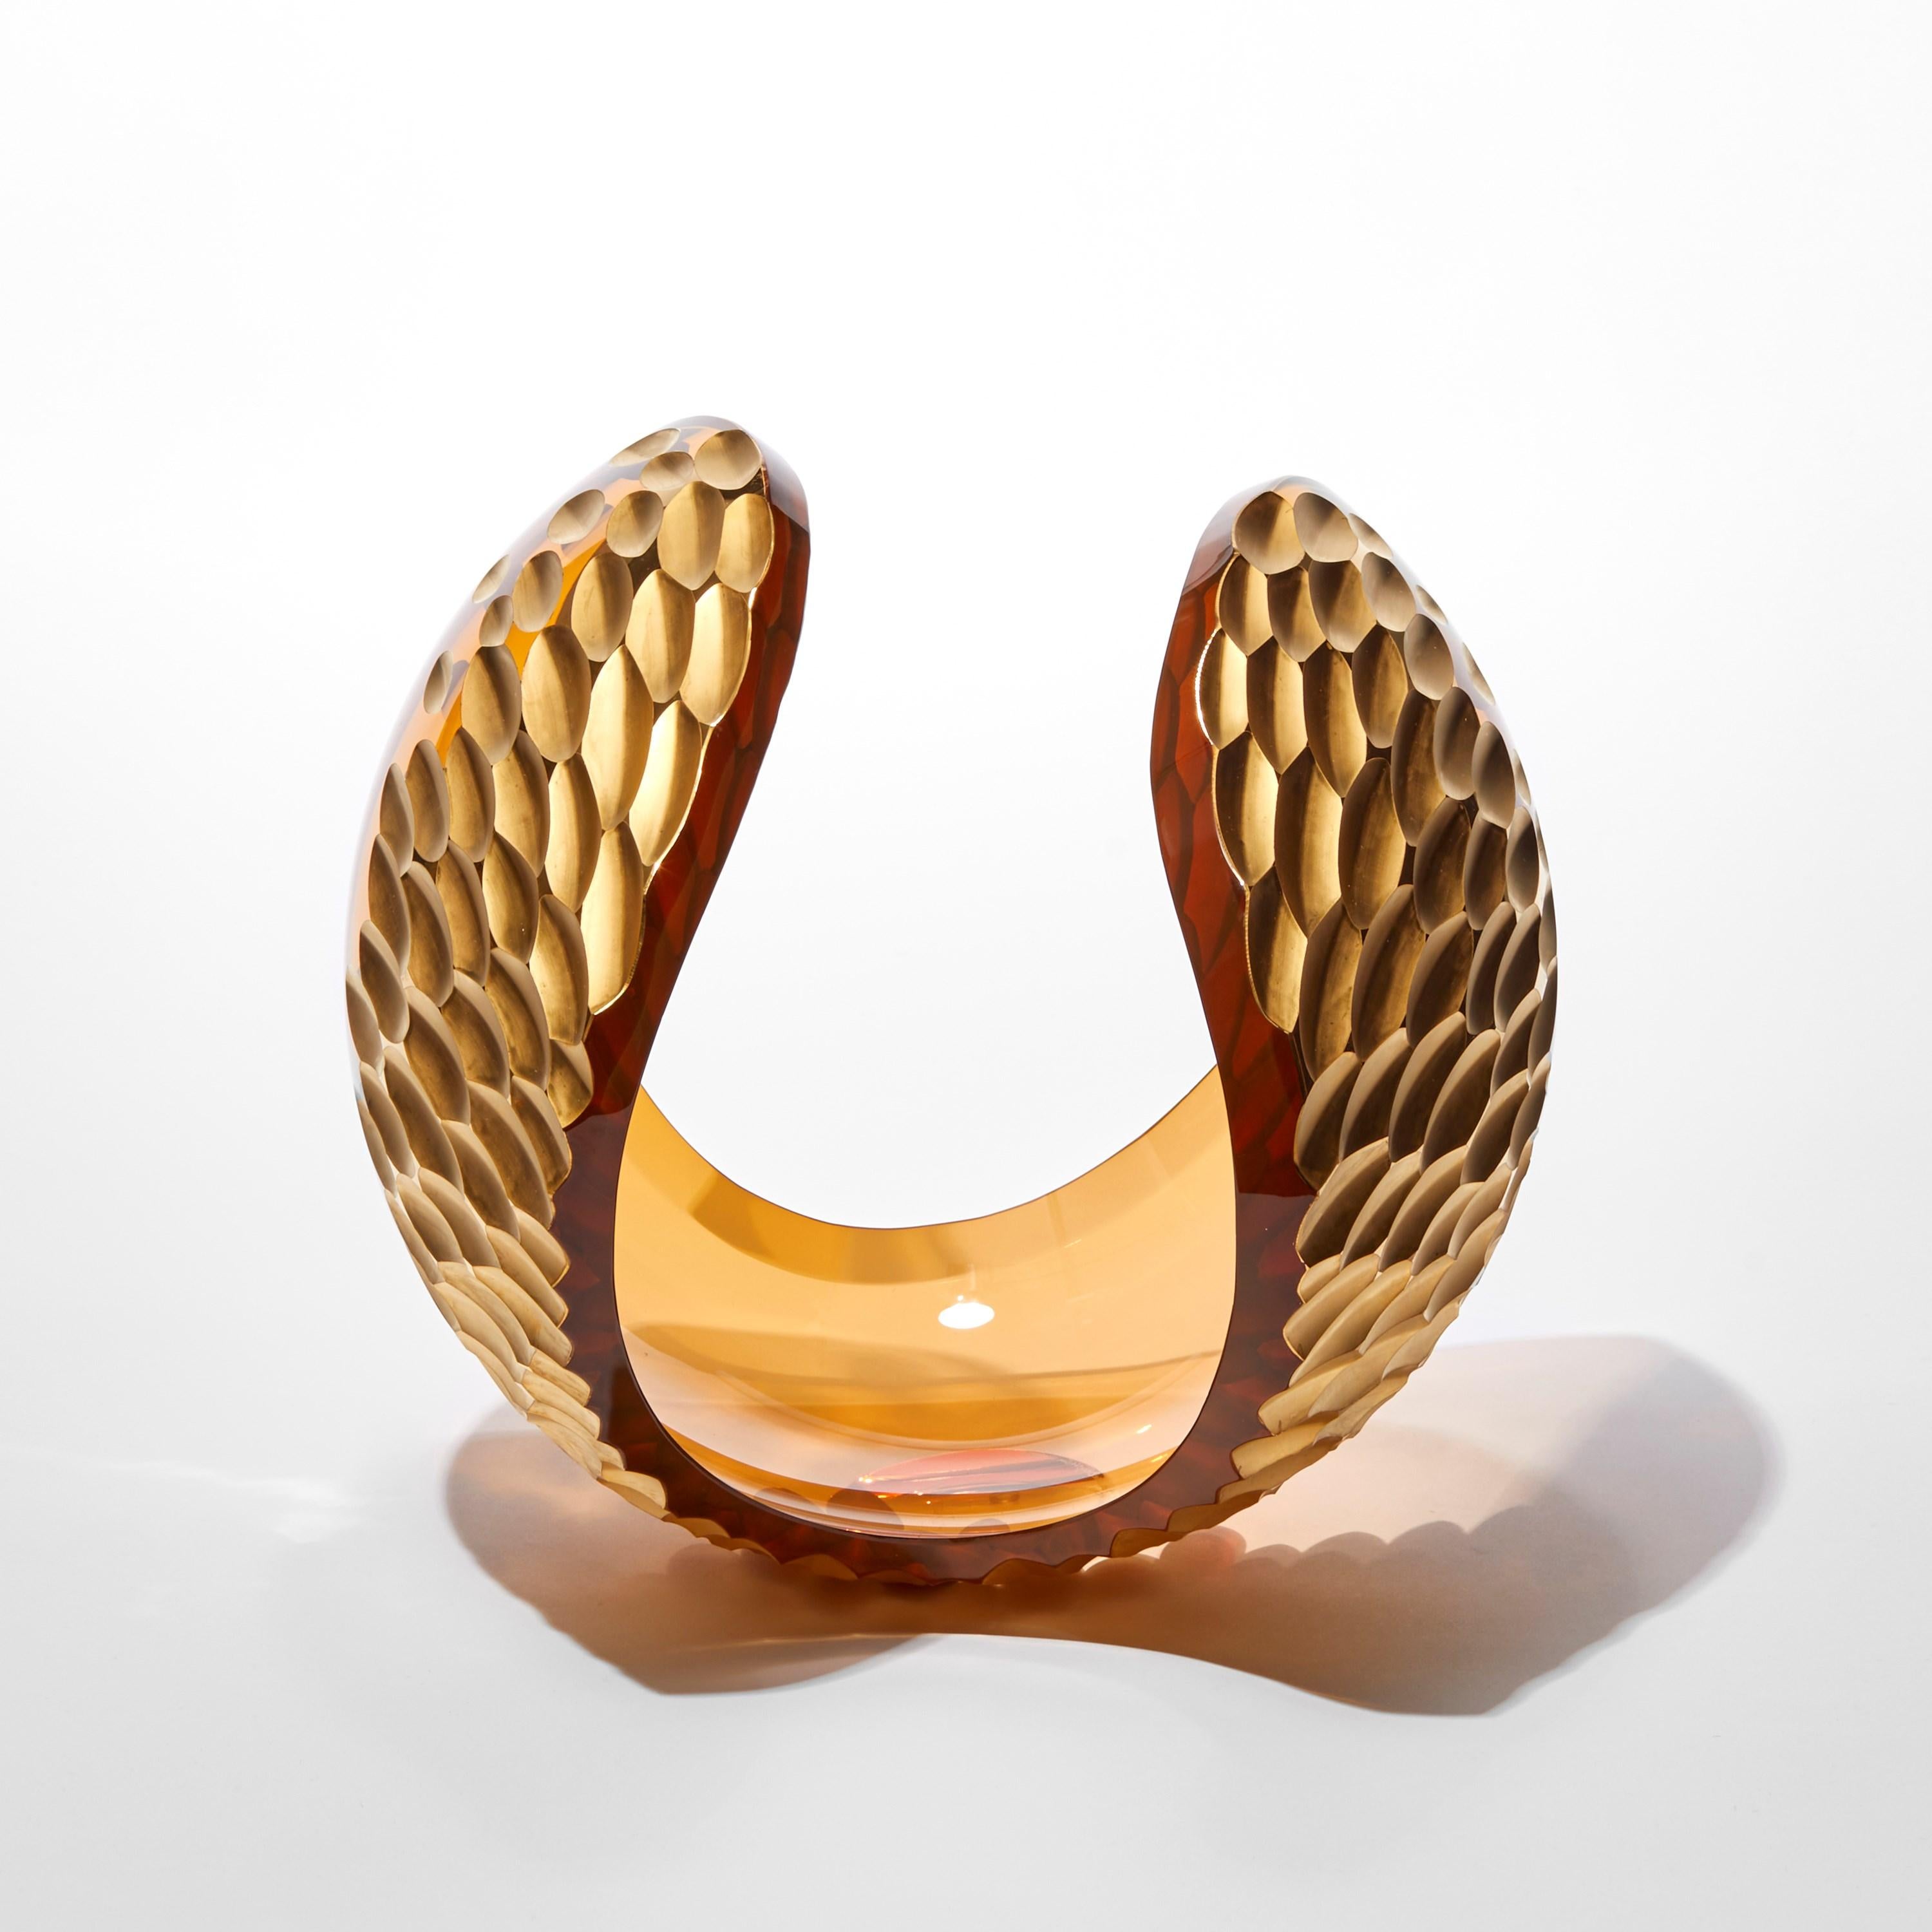 Swedish Planet in Amber Gold, a handblown glass & 23 ct gold sculpture by Lena Bergström